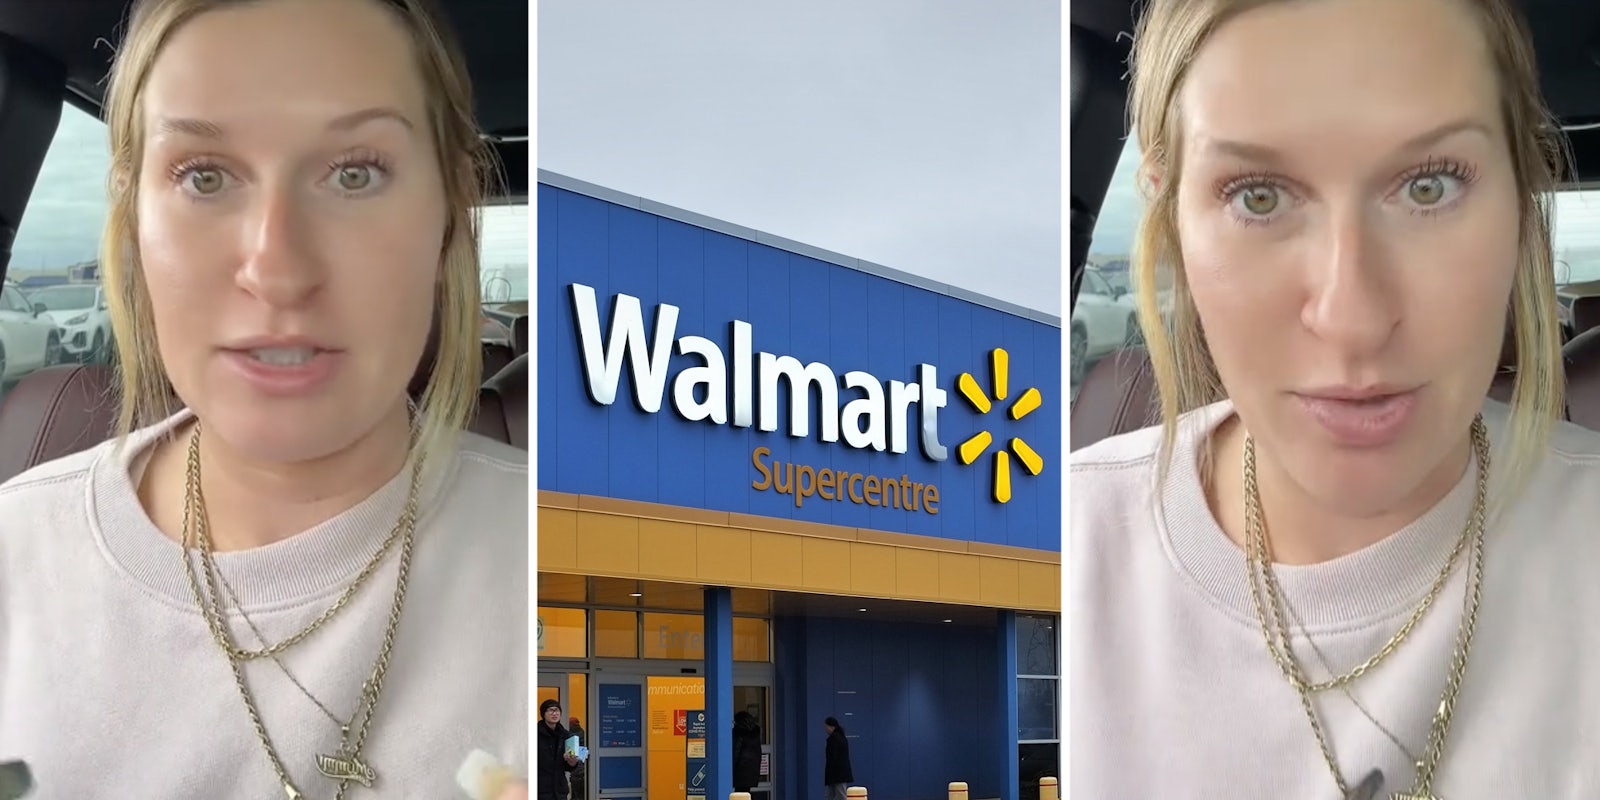 Walmart clearance